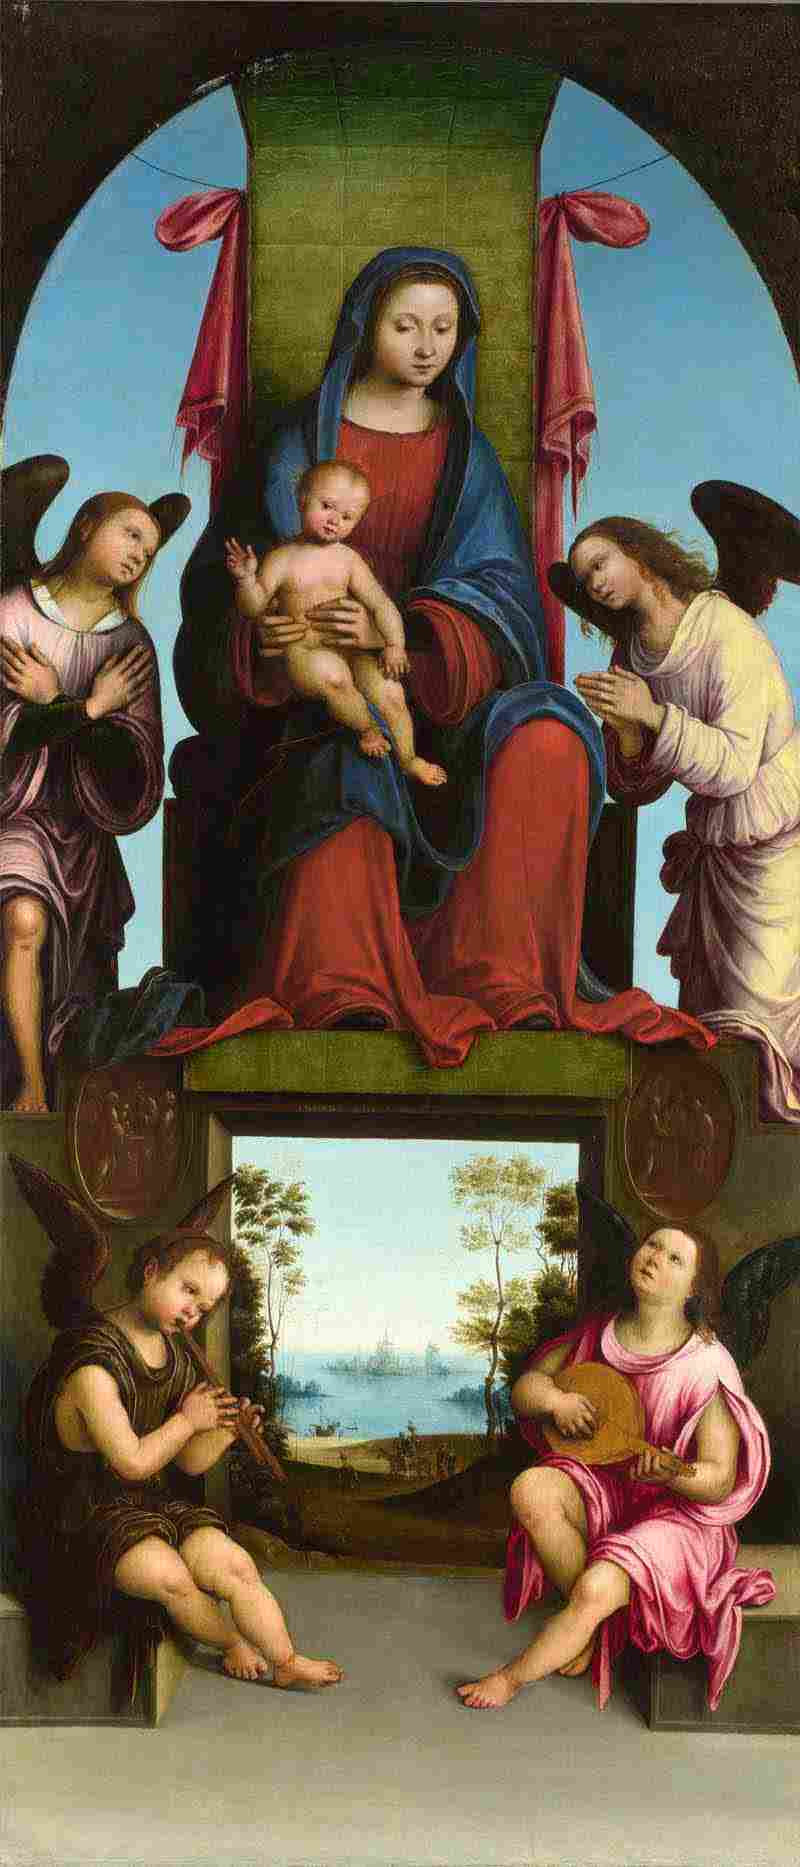 The Virgin and Child. Lorenzo Costa